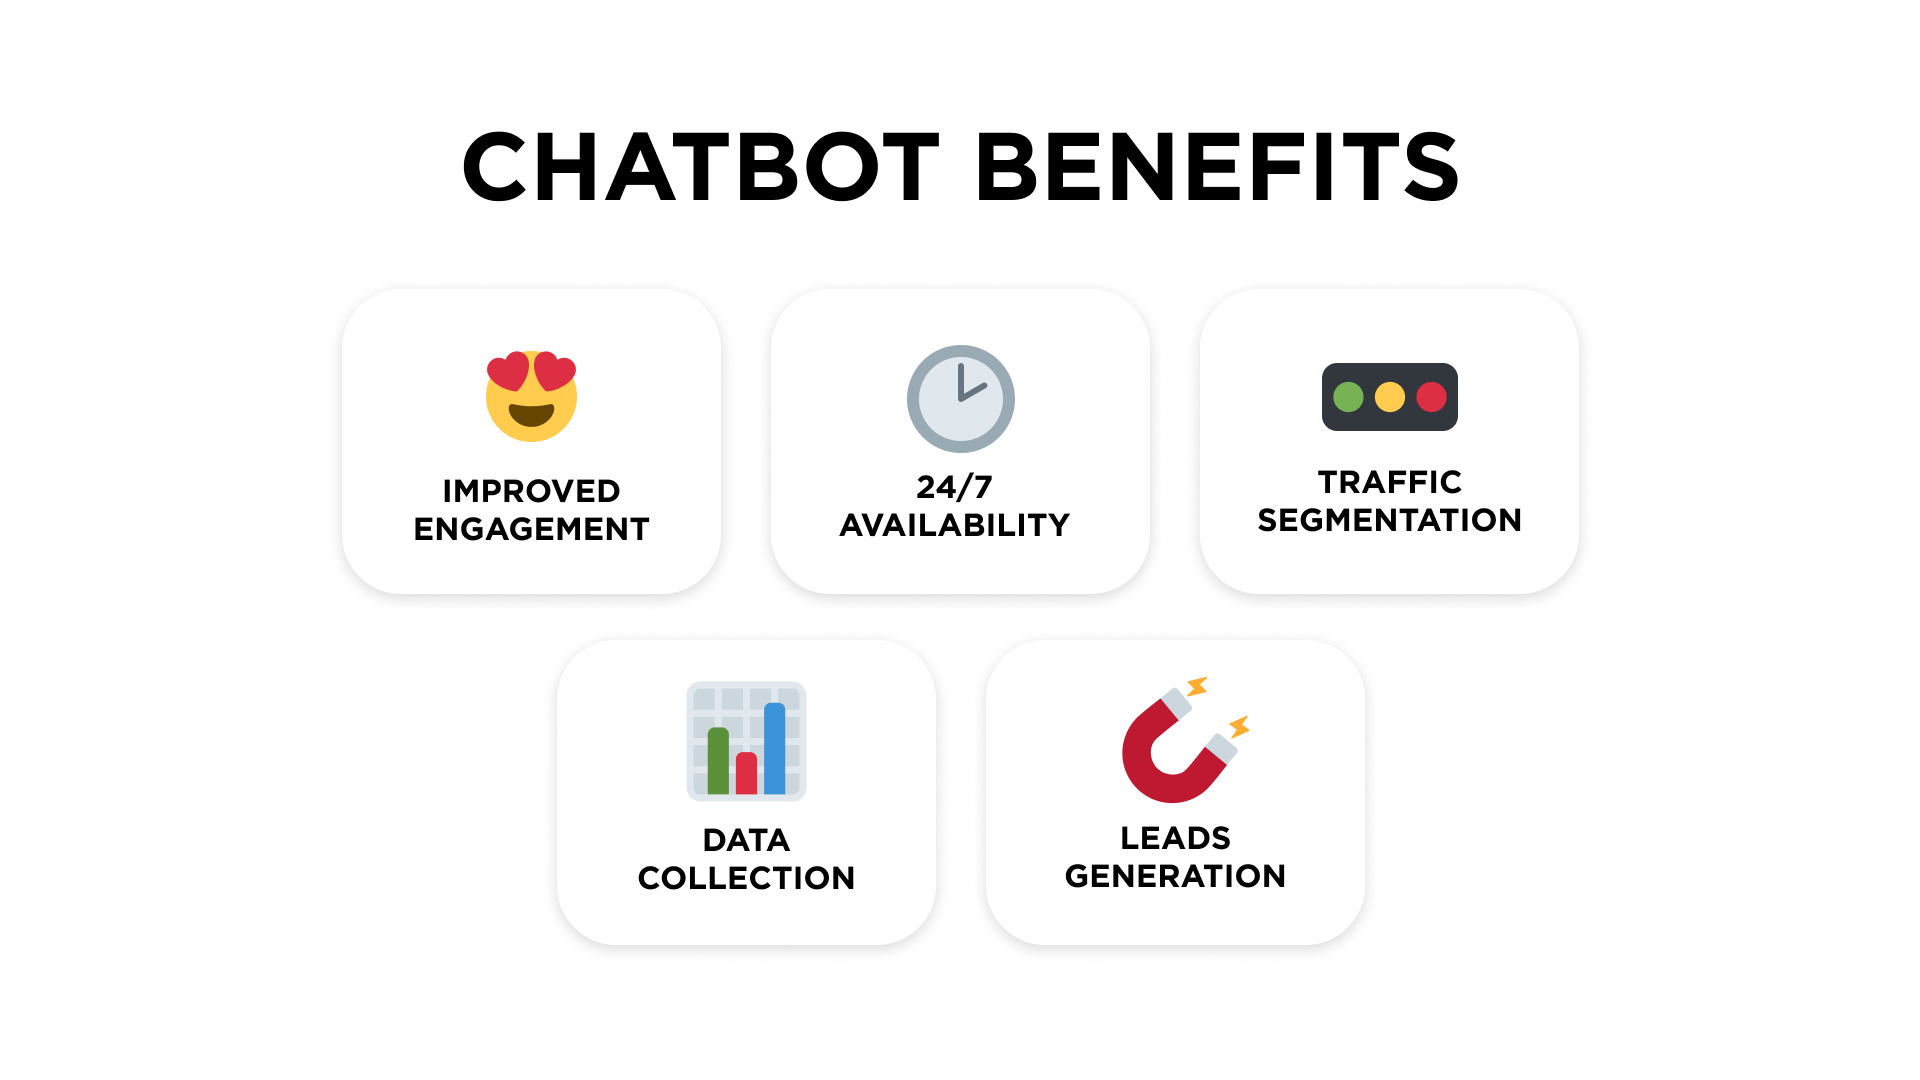 Major benefits of chatbots